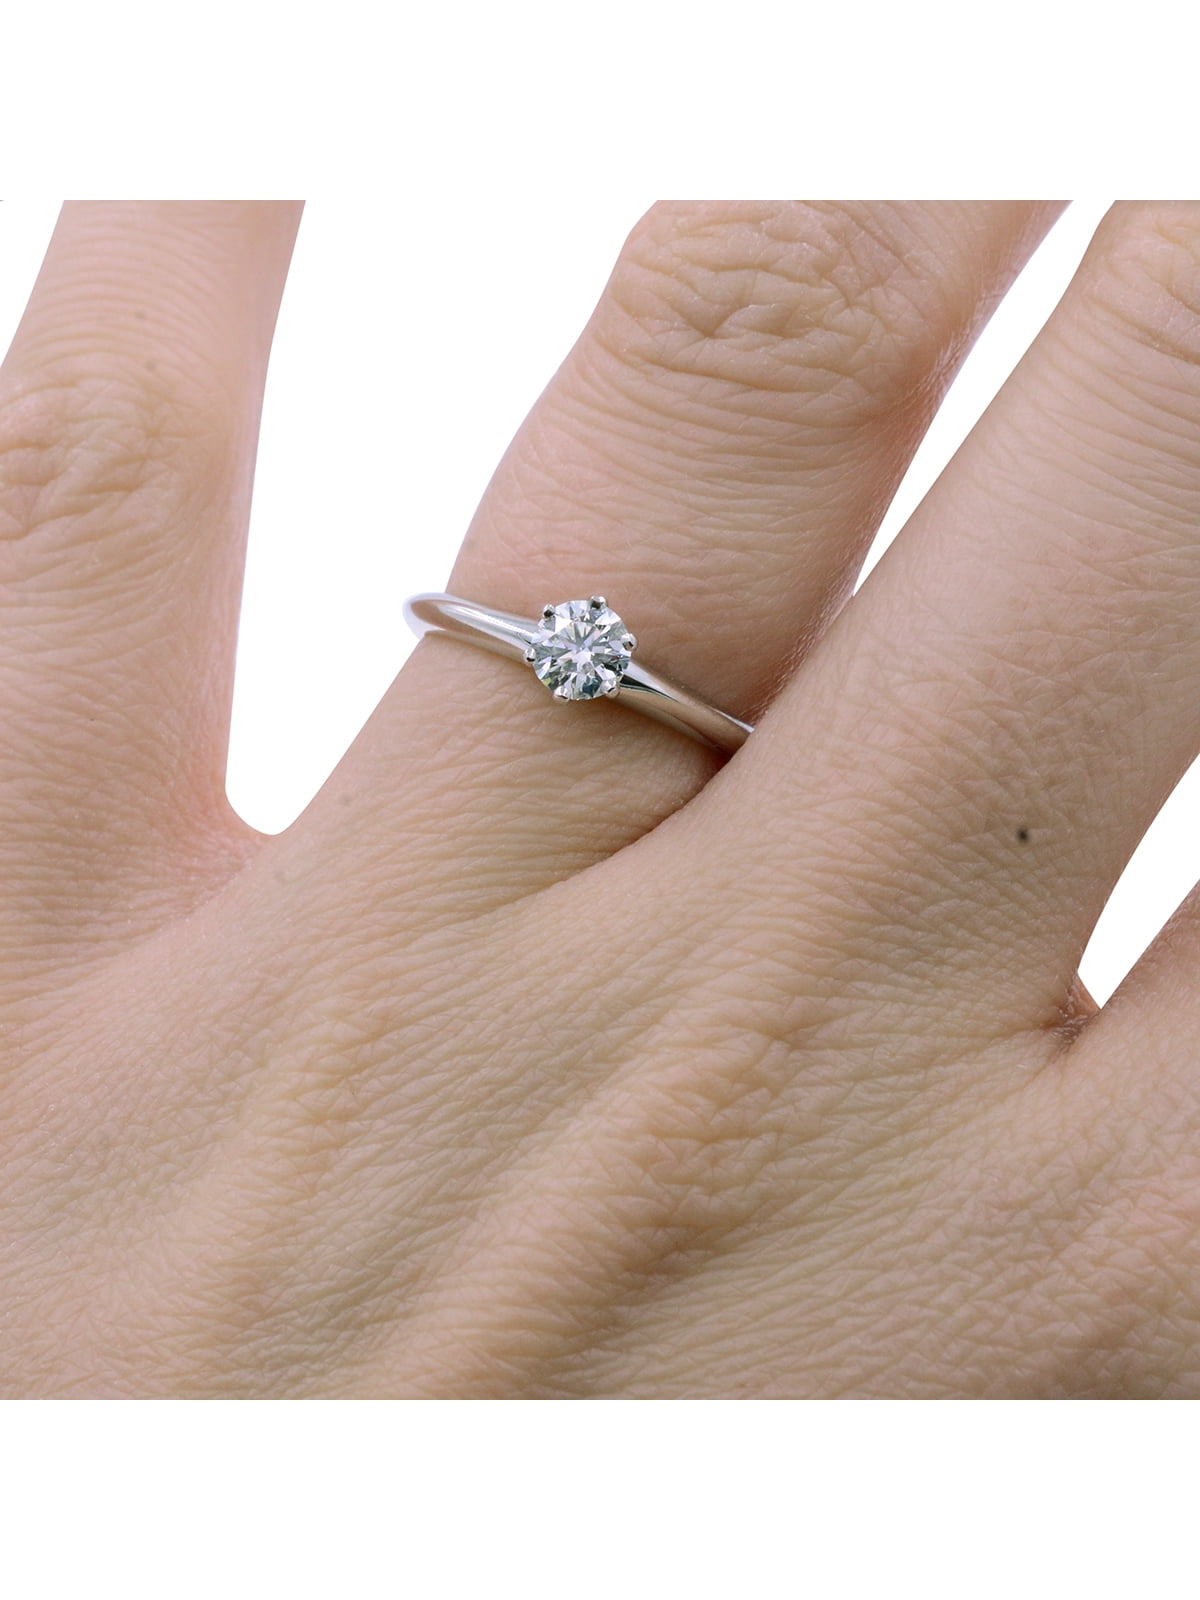 Tiffany & Co Princess Cut 3.72 ct Diamond Channel Platinum Engagement Ring  $140k | eBay